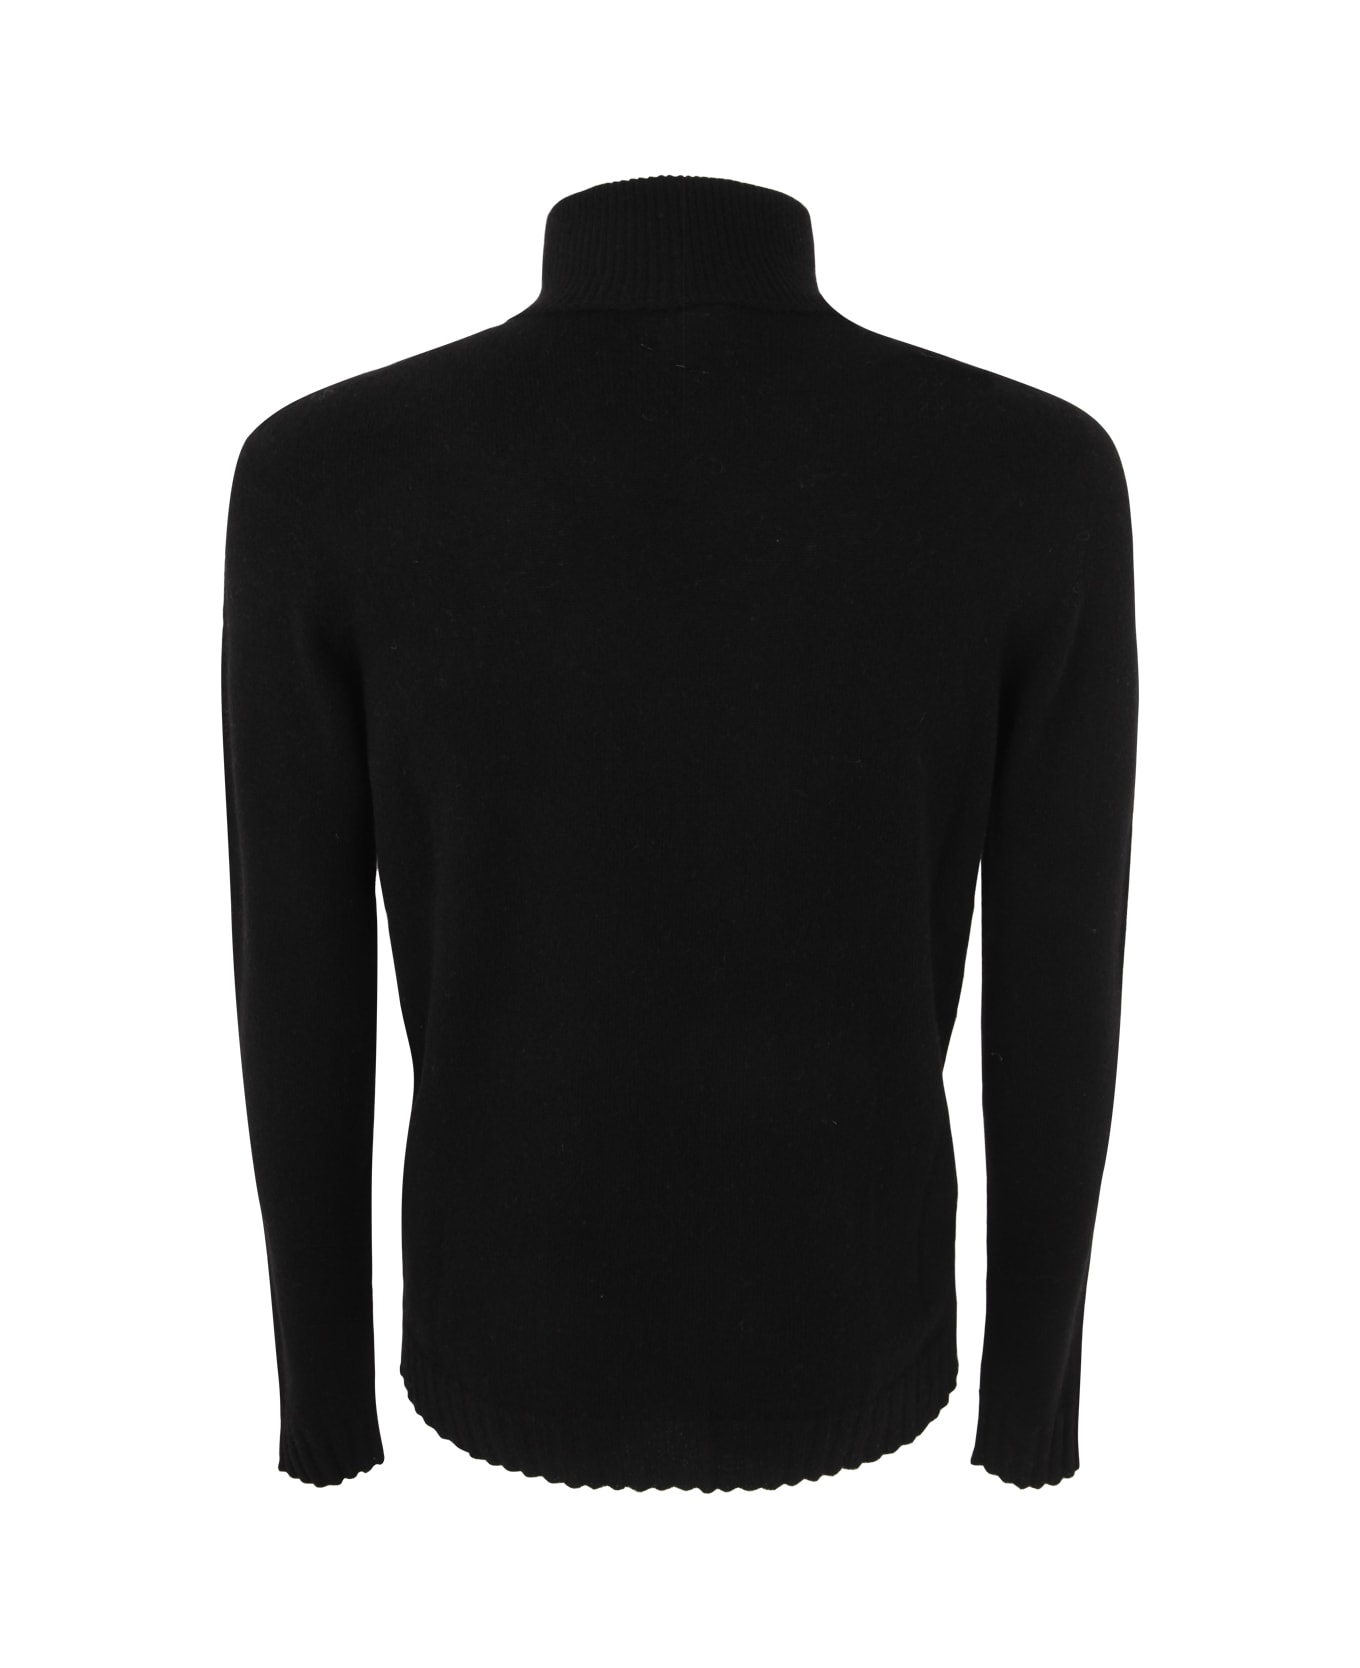 MD75 Cashmere Turtle Neck Sweater - Black